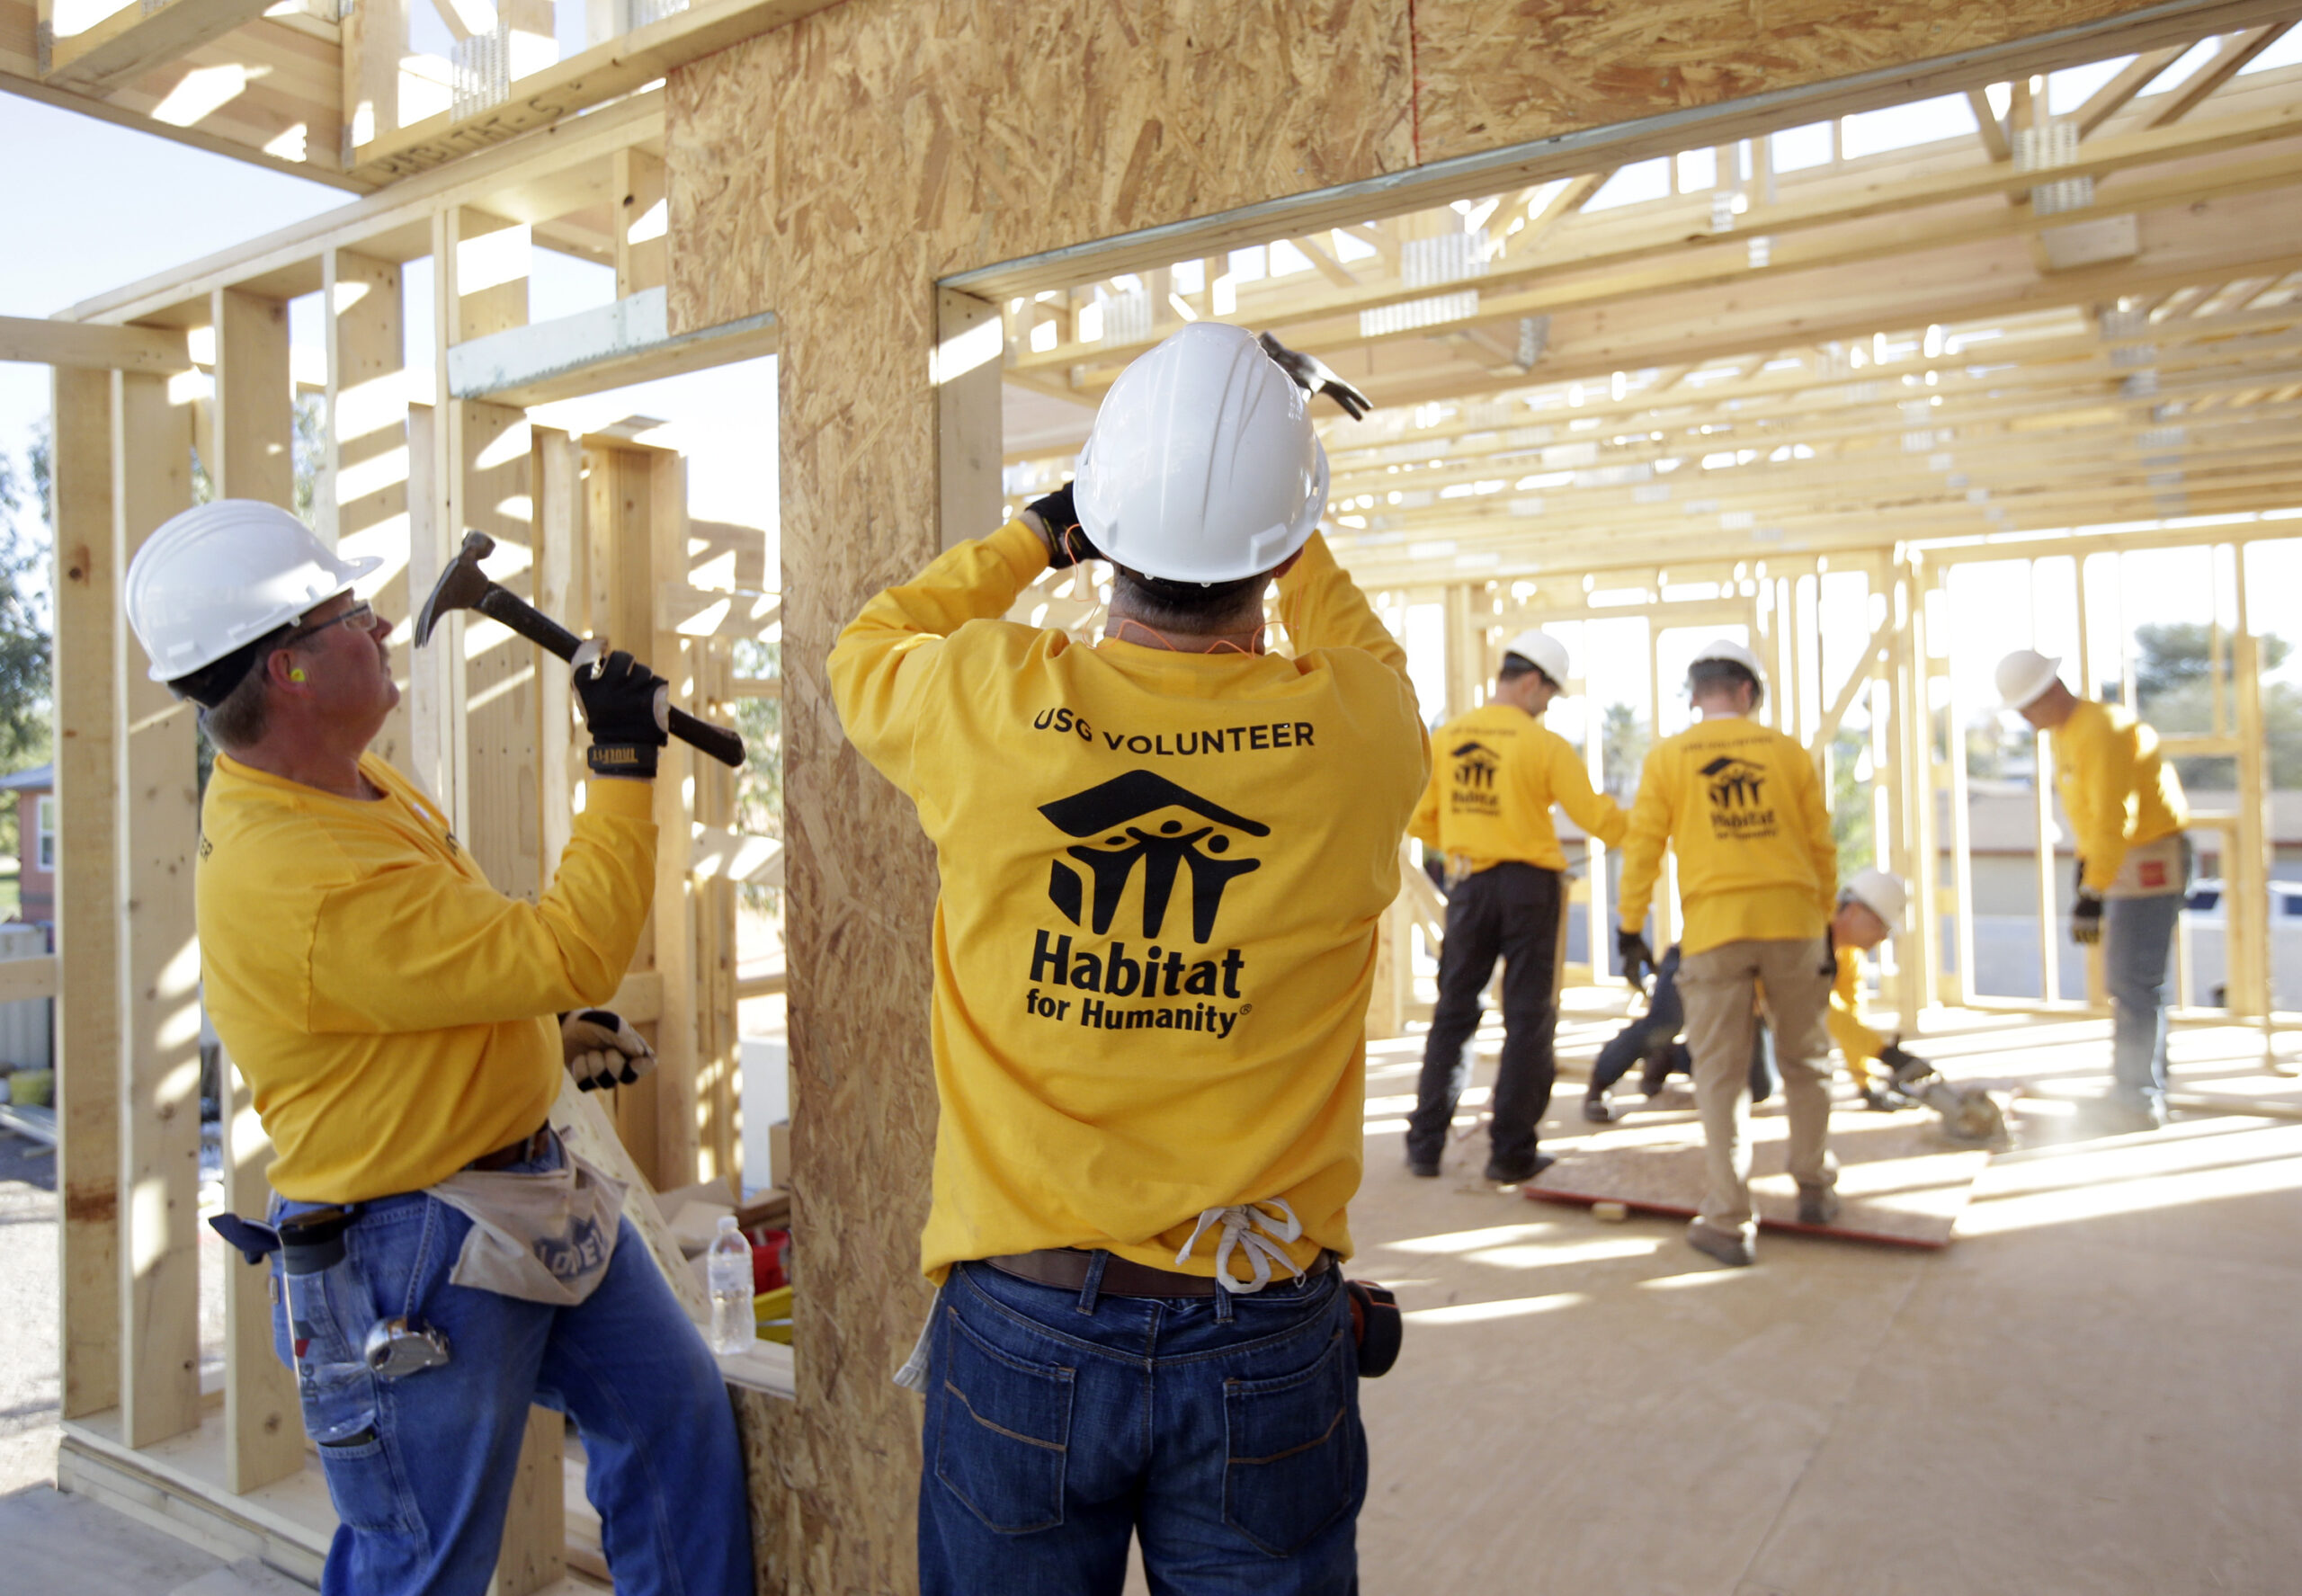 Habitat for Humanity, building homes, construction, volunteer